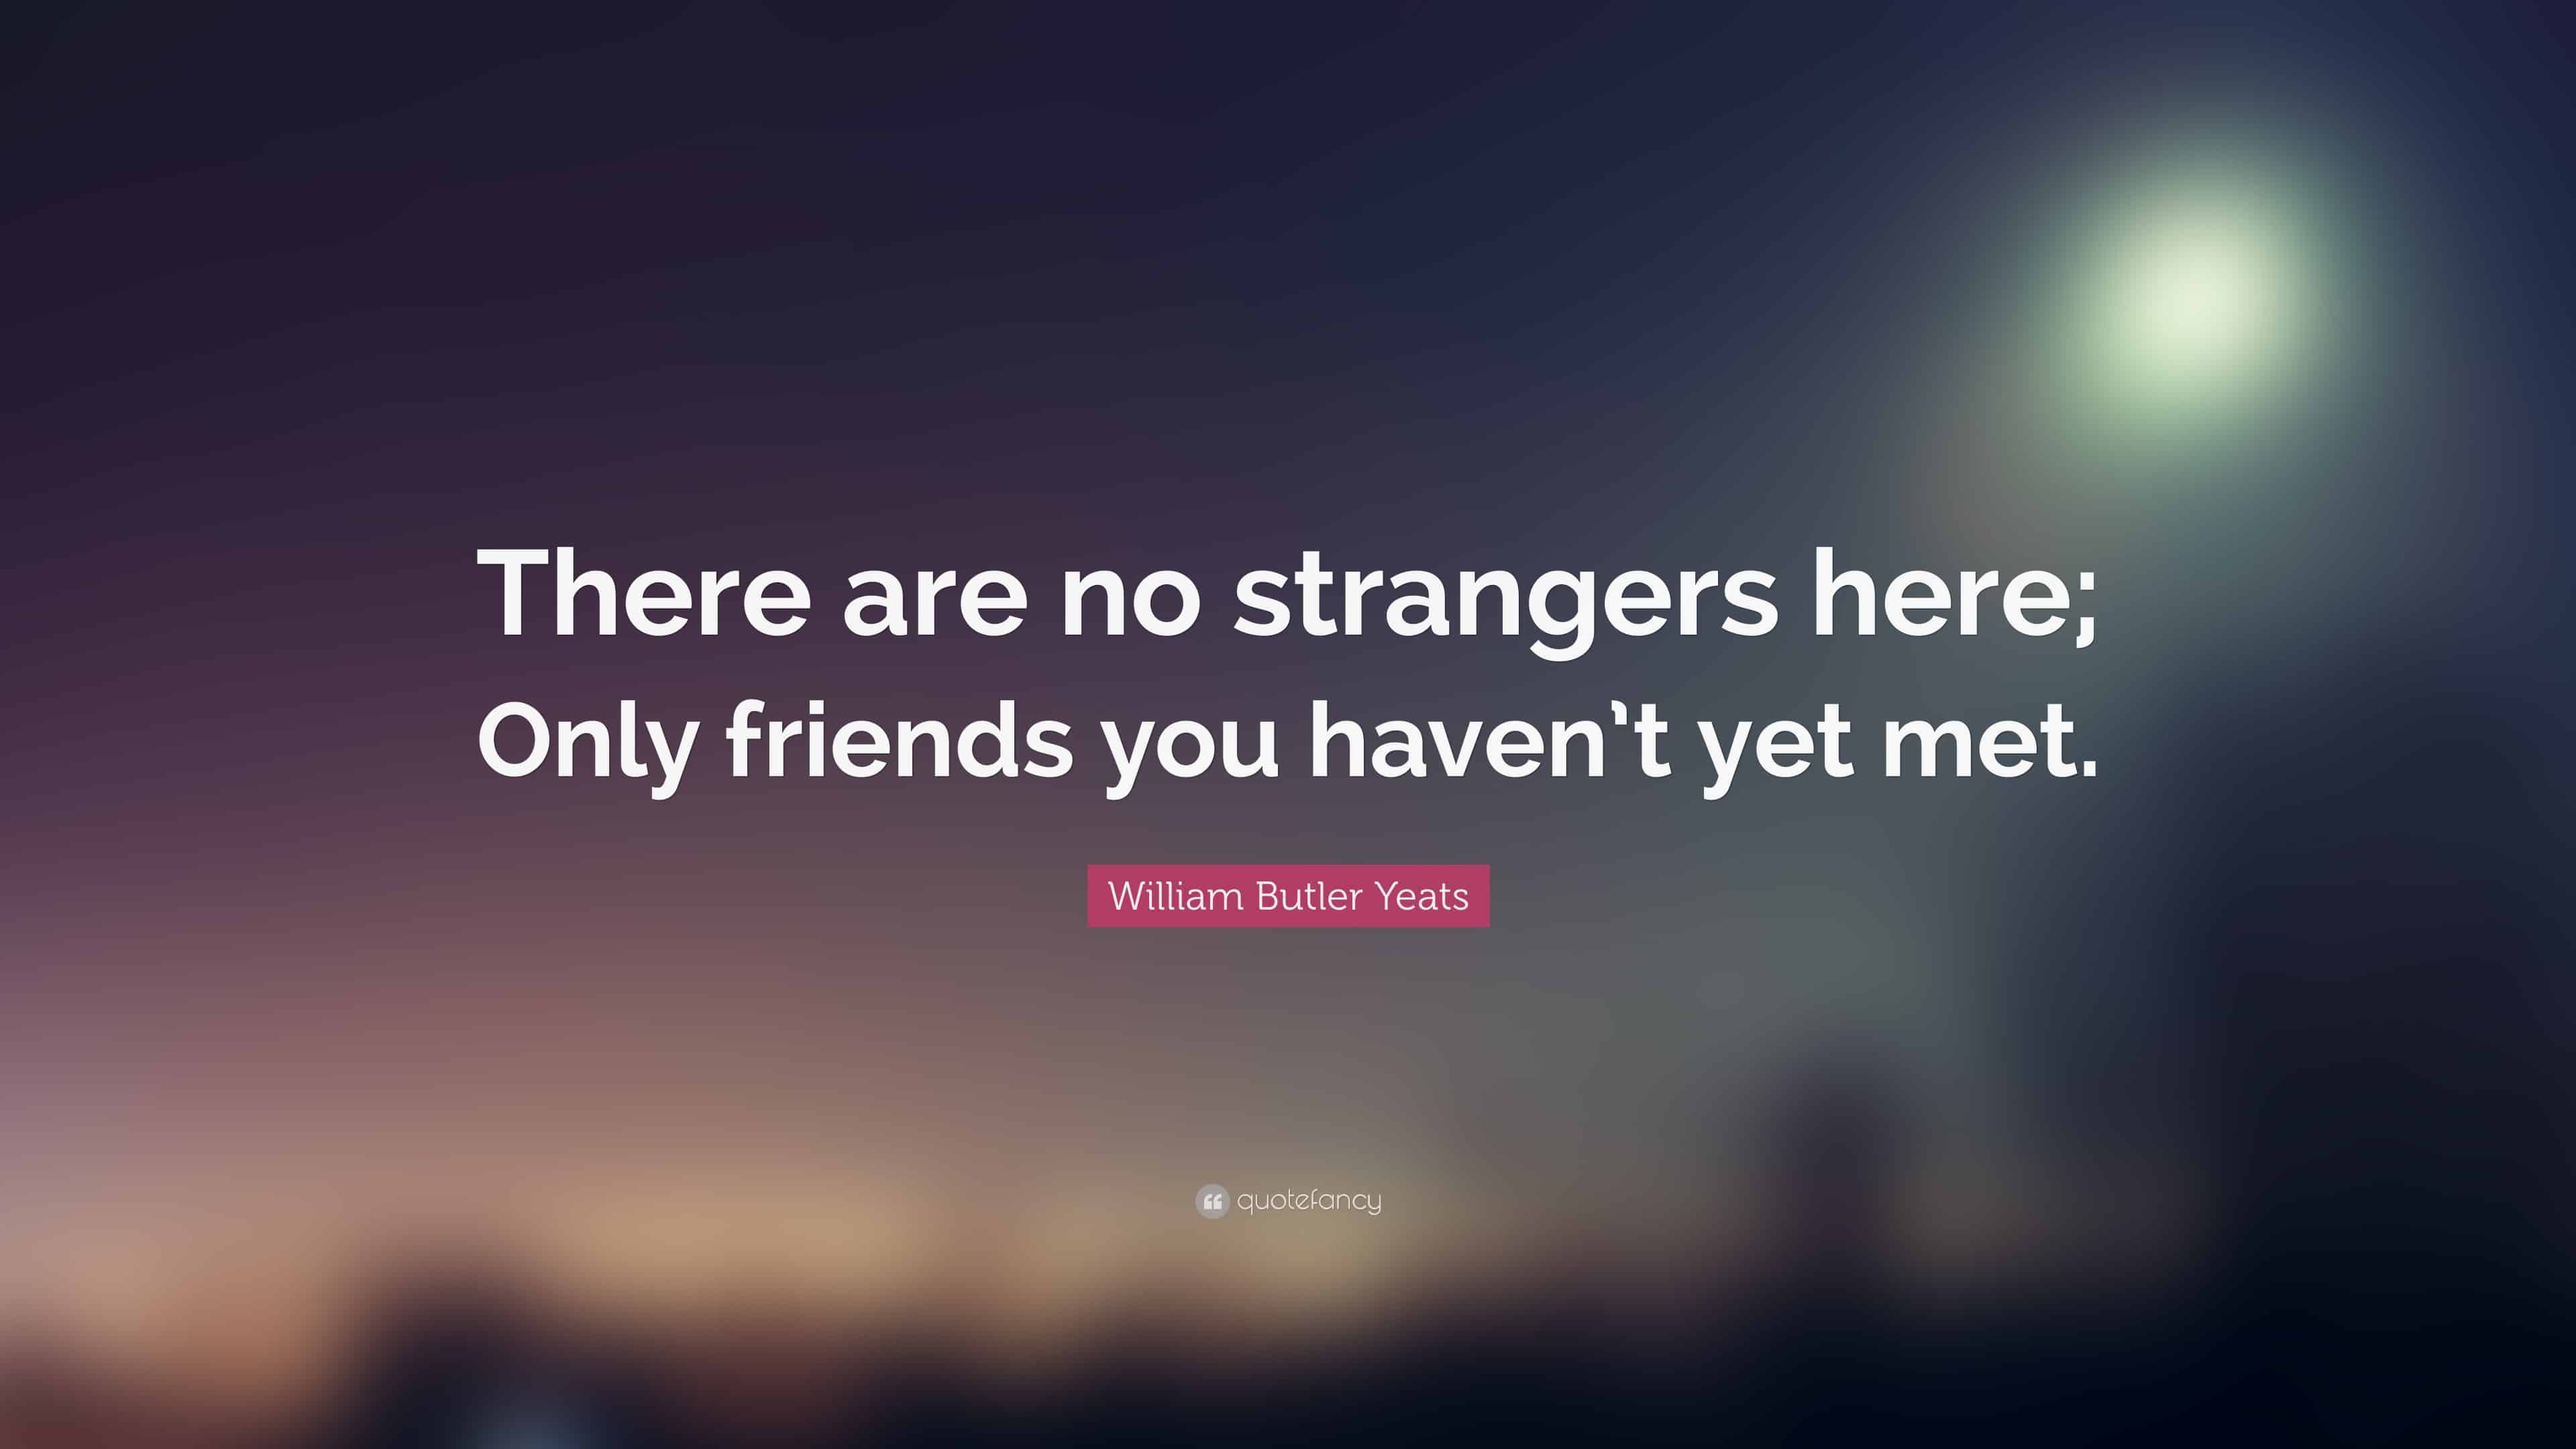 TalkWithStrangers Blog Best Tips Meet New People Make Friends